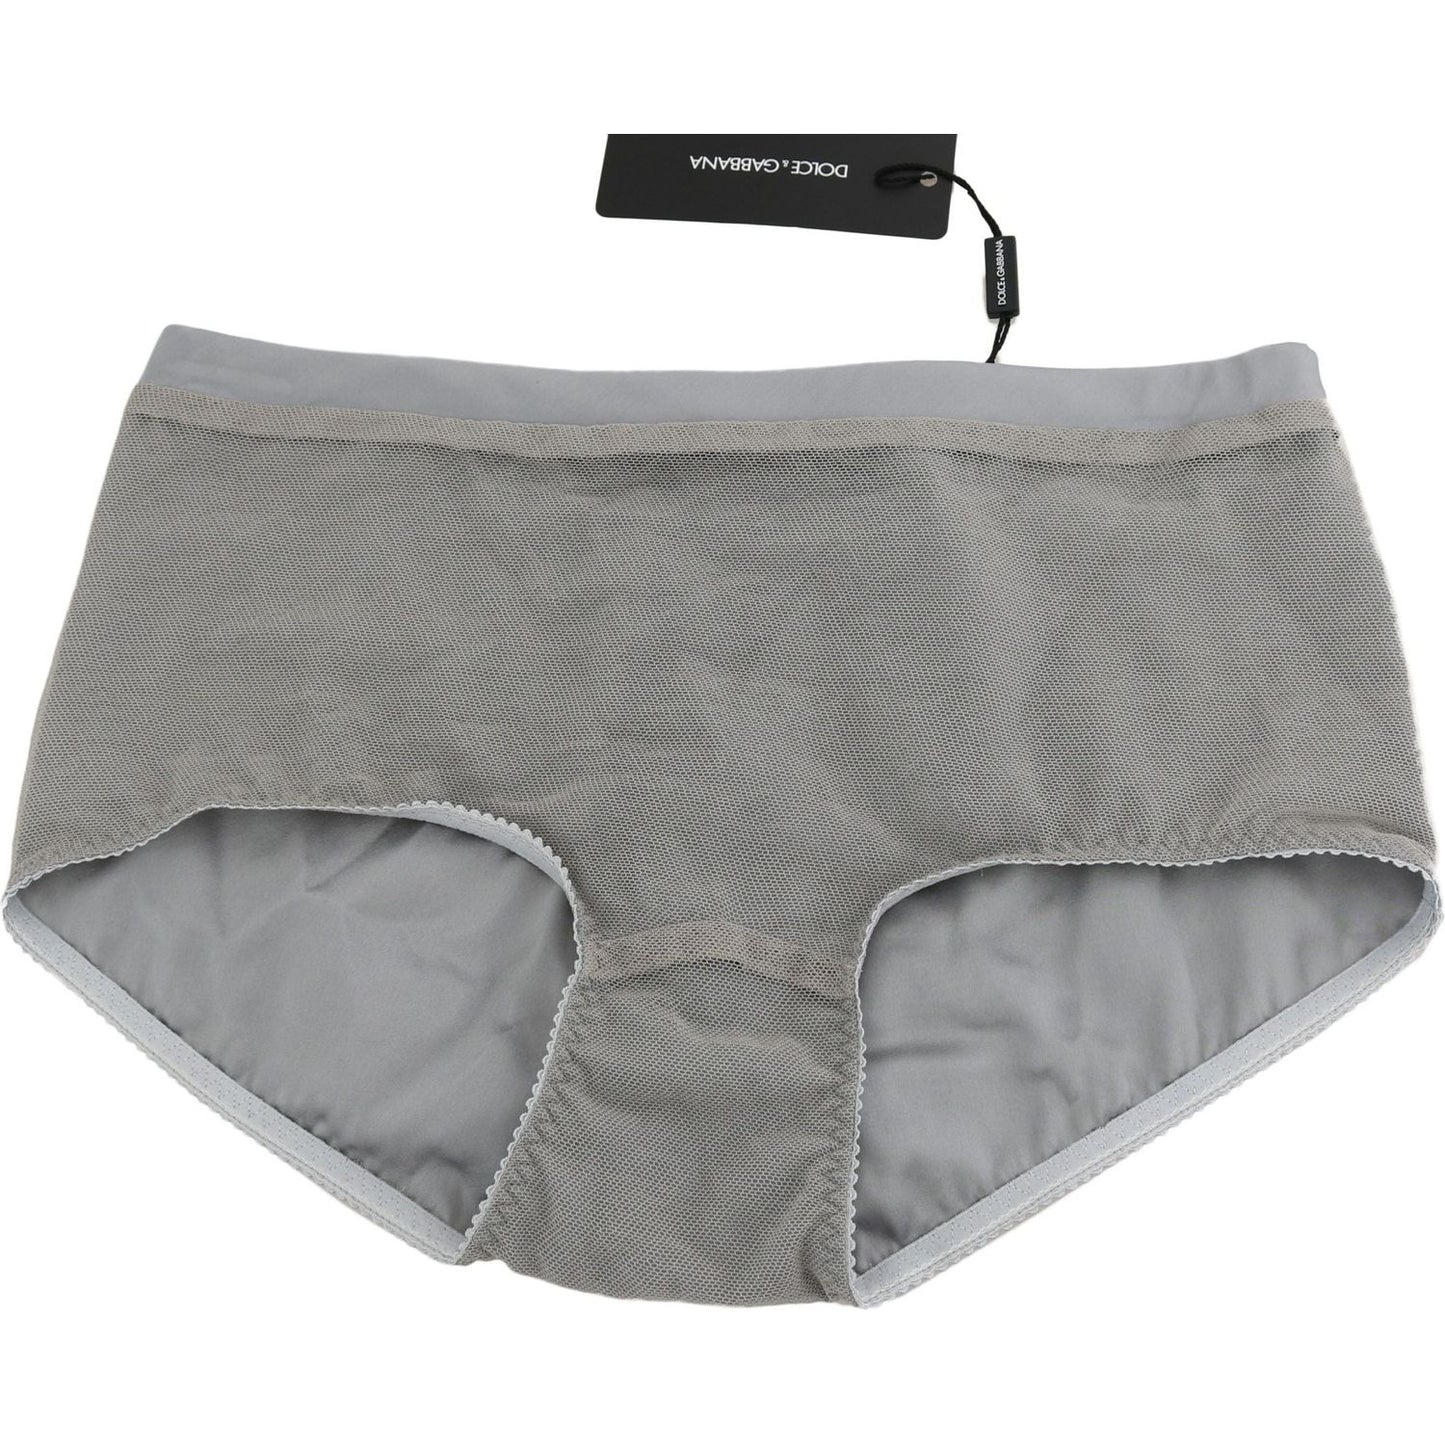 Dolce & Gabbana Underwear Silver With Net Silk Bottoms underwear-silver-with-net-silk-bottoms IMG_3704-scaled-4ae973ef-014.jpg